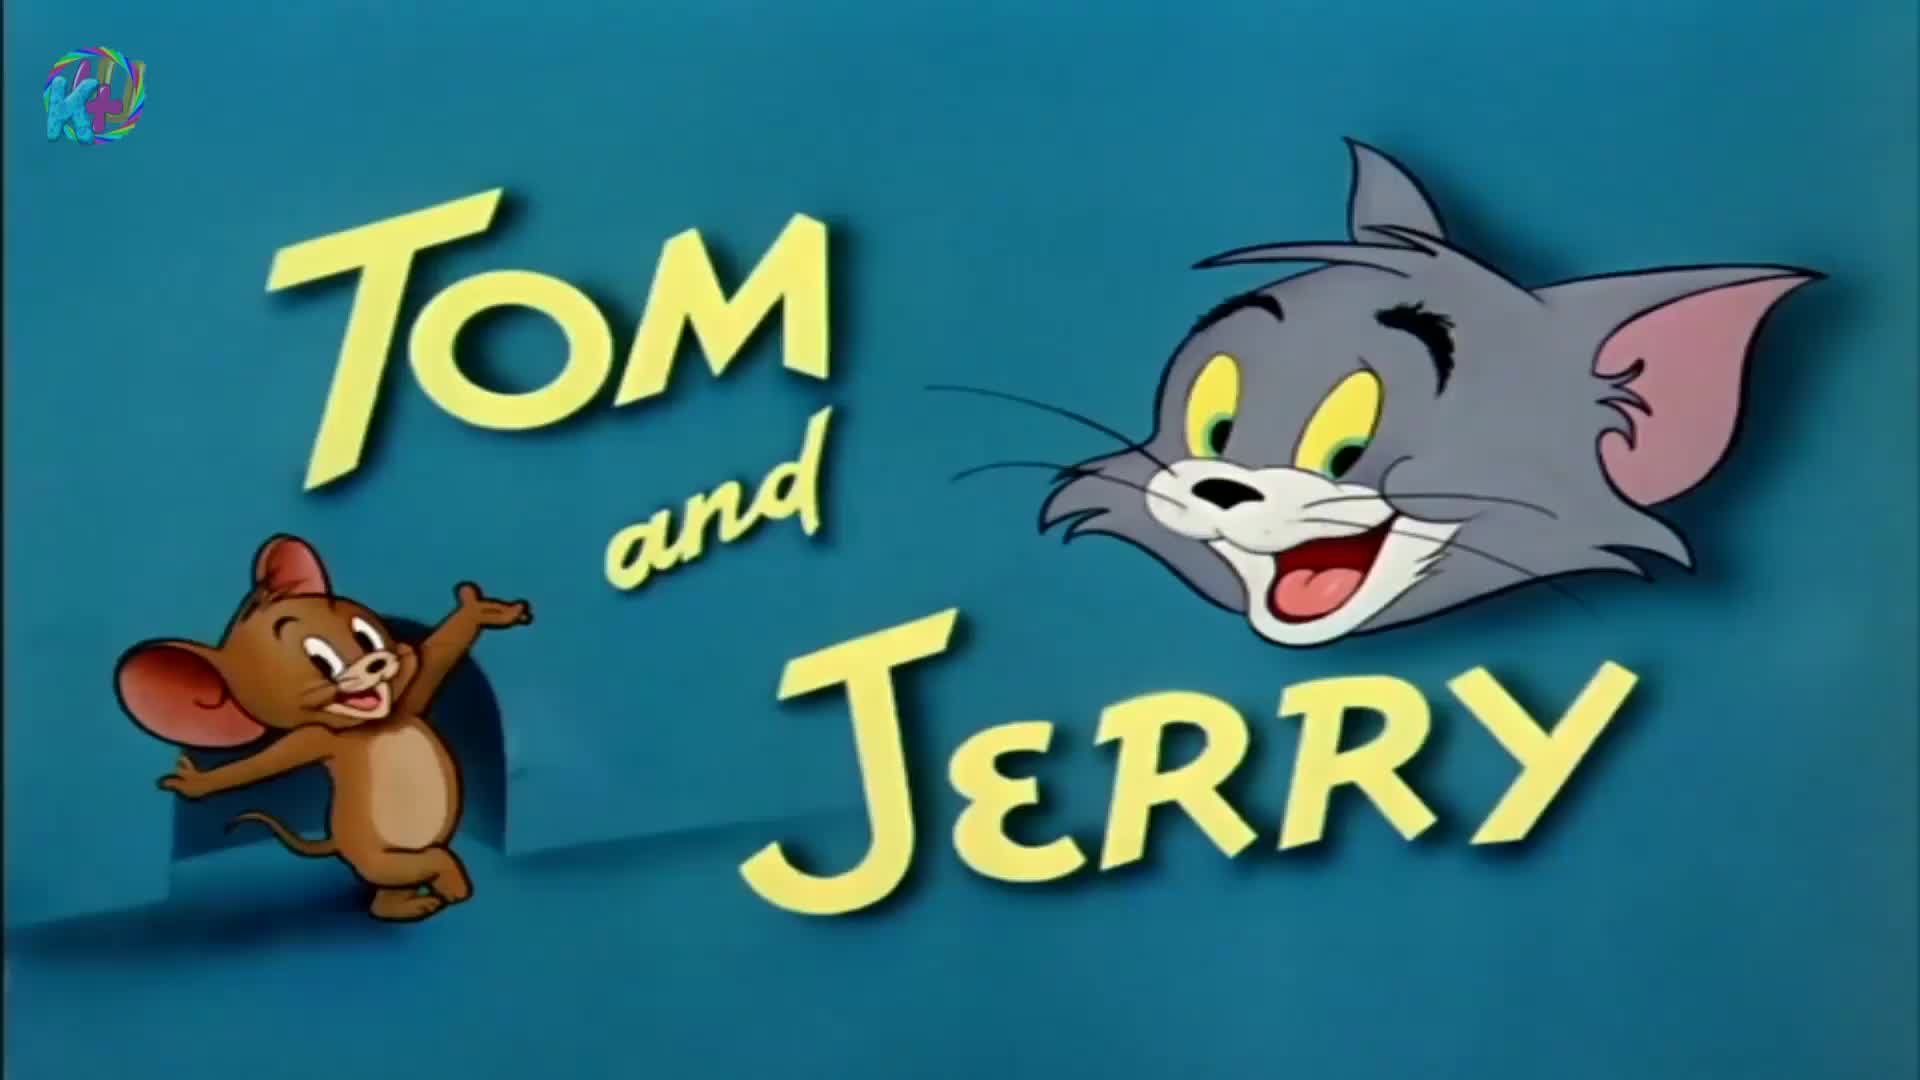 Слово джерри. Том и Джерри. Том и Джерри конец. Конец мультфильма том и Джерри. Конец мультсериала том и Джерри.